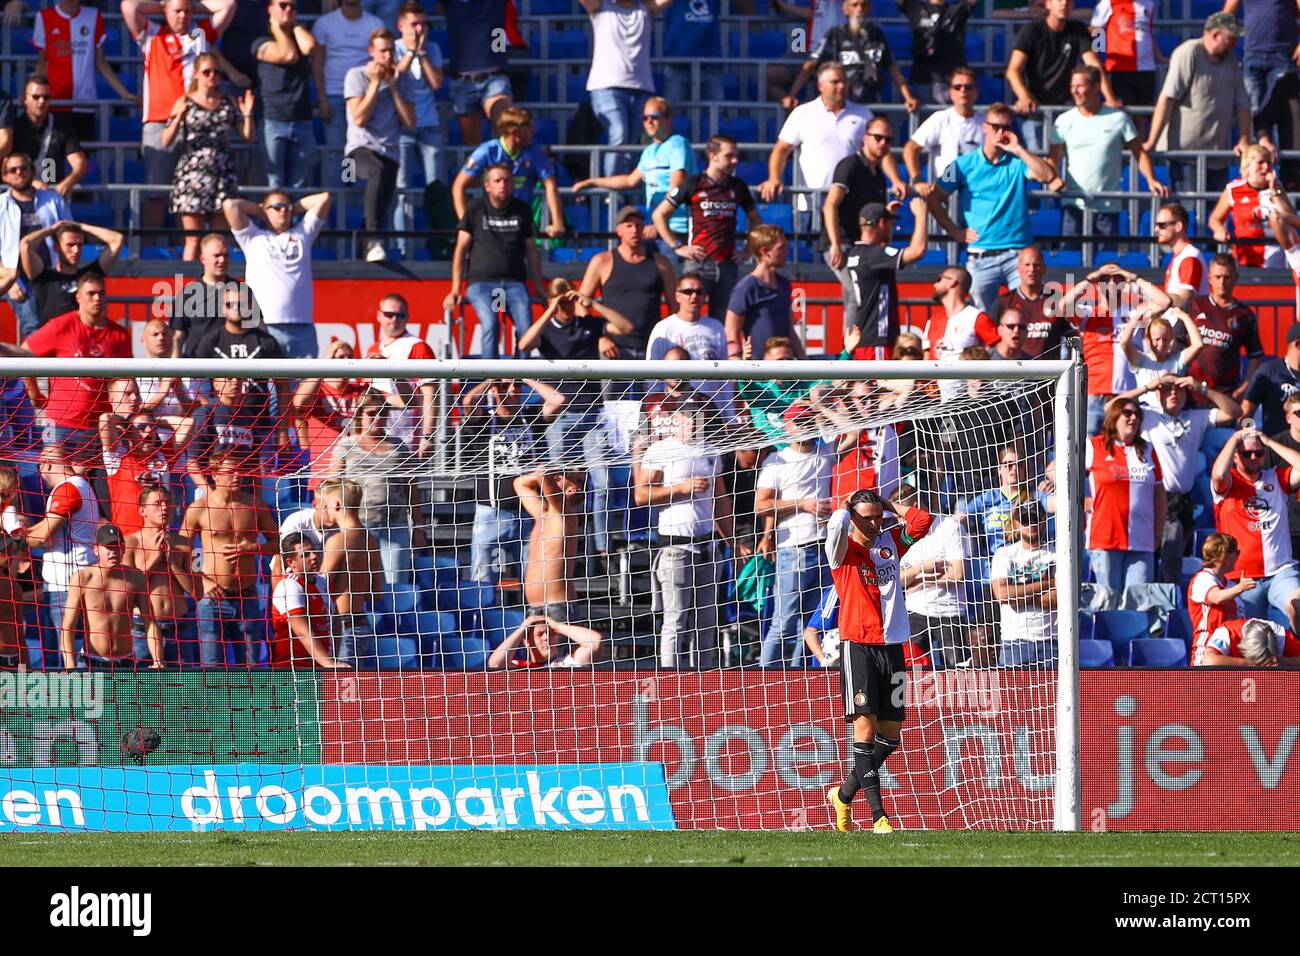 ROTTERDAM, NETHERLANDS - SEPTEMBER 20: Steven Berghuis of Feyenoord after the eredivisie match between Feyenoord and FC Twente at stadium De Kuip on september 20, 2020 in Rotterdam, Netherlands.  *** Local Caption *** Steven Berghuis Stock Photo